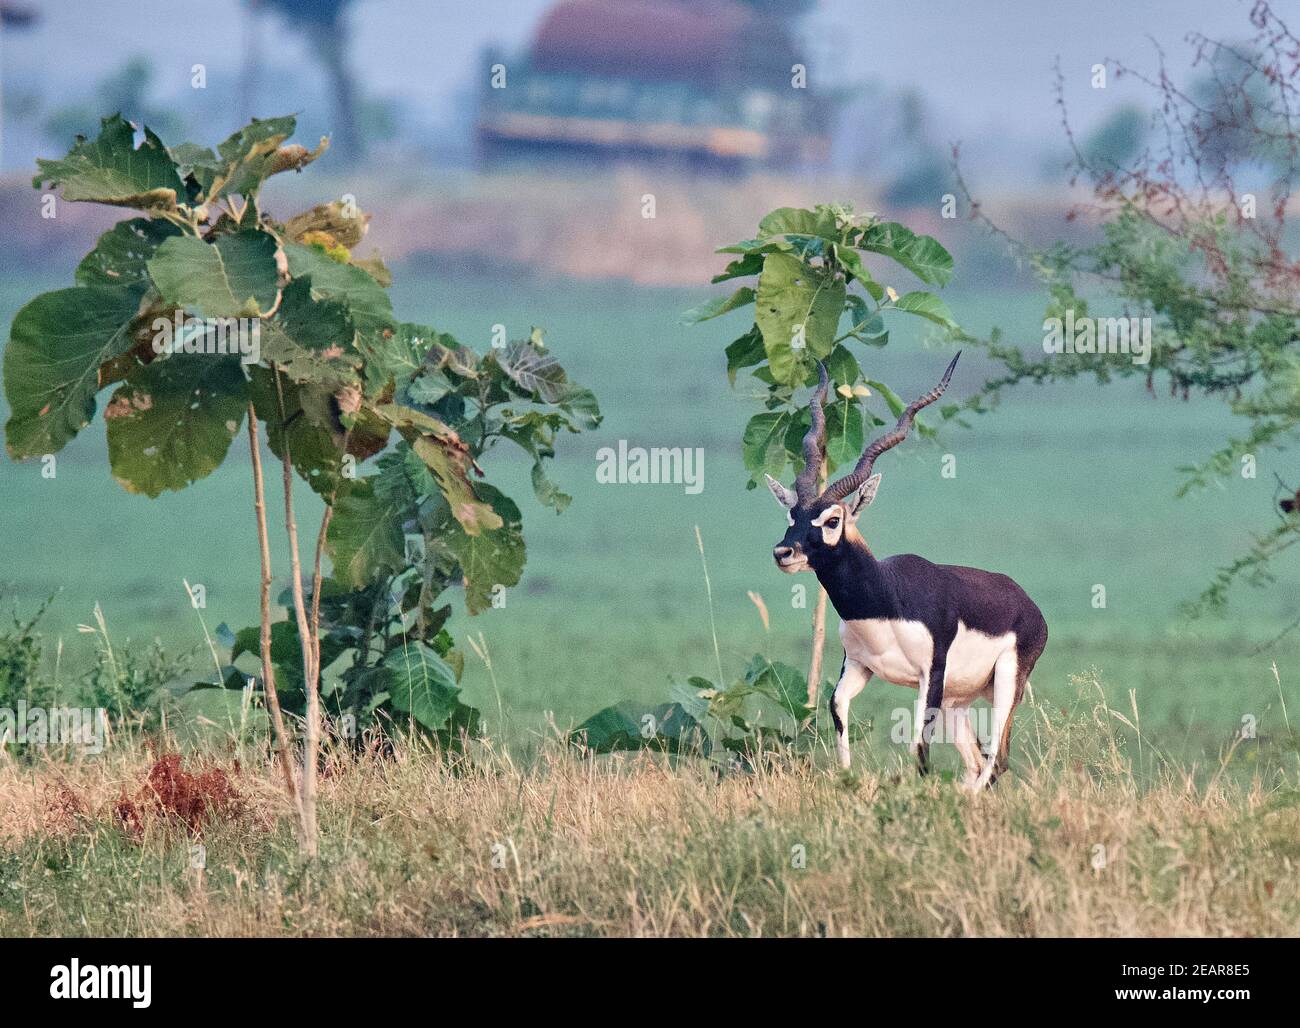 Blackbuck/Indian Antelope Stock Photo